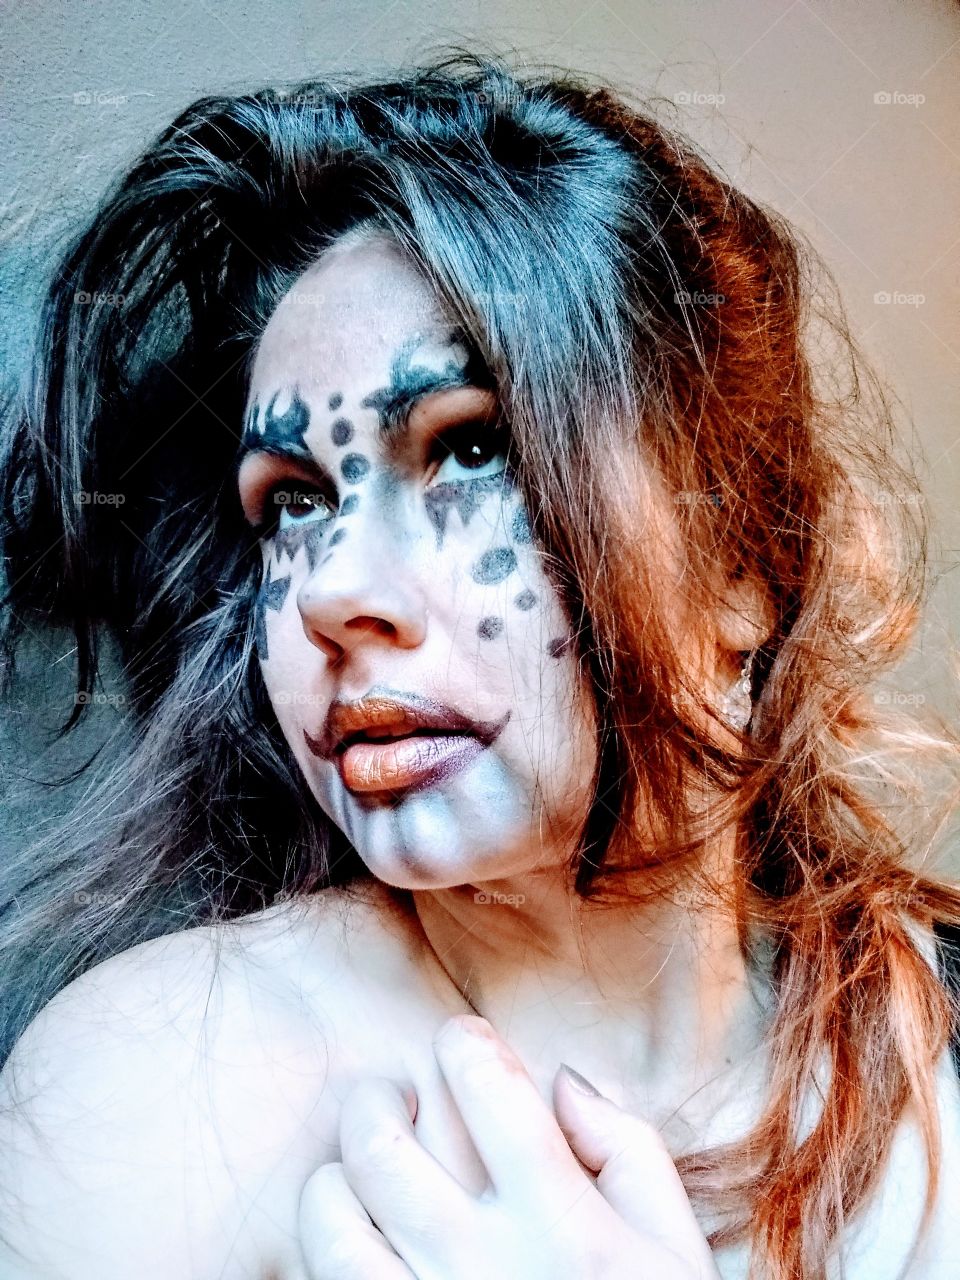 close-up image of woman with Halloween makeup